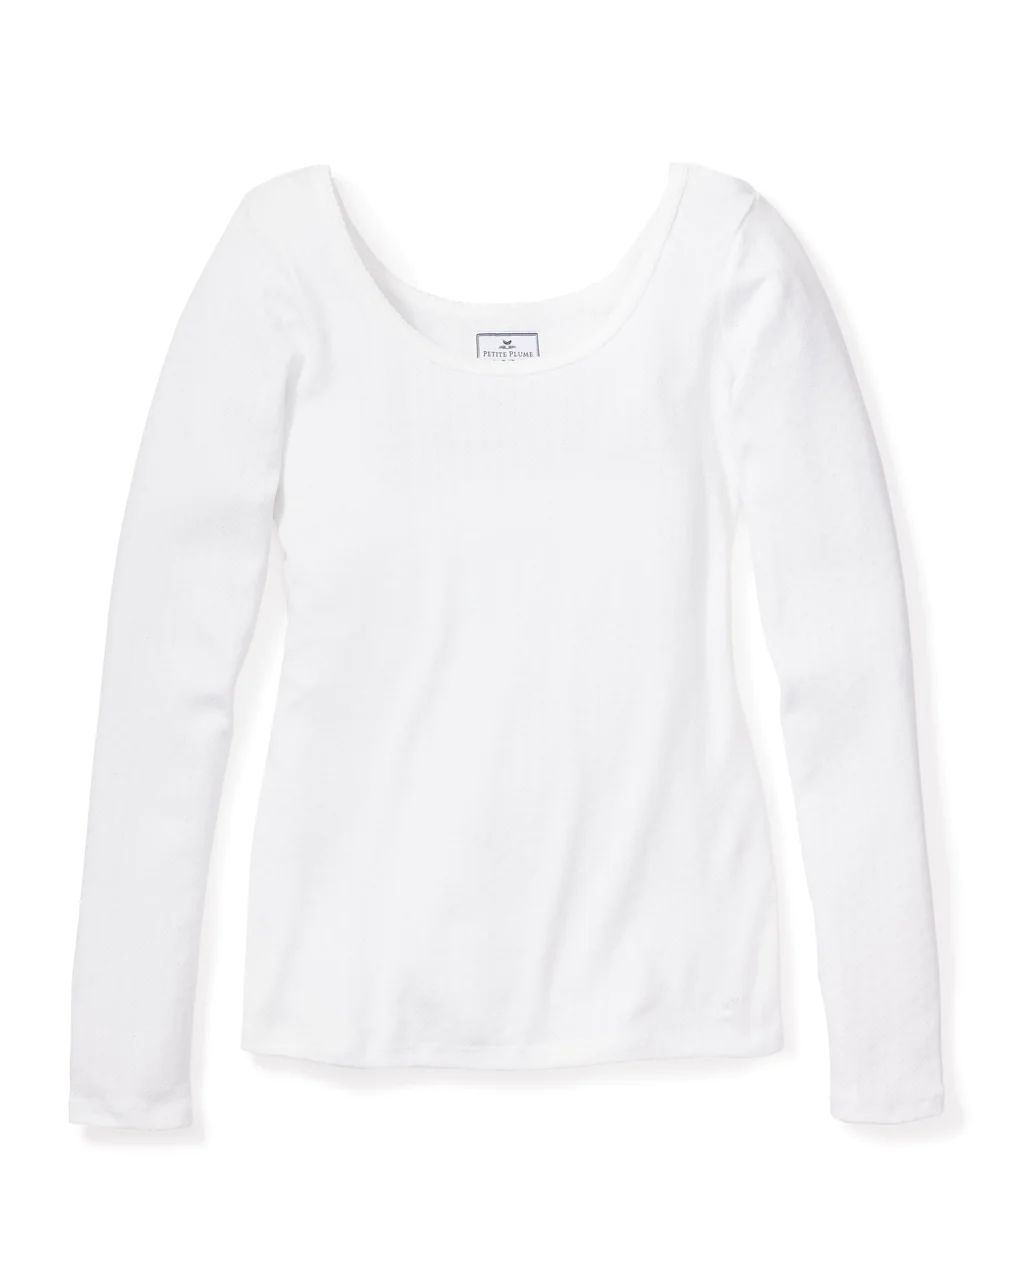 Women's Long Sleeve Pointelle Top in White | Petite Plume